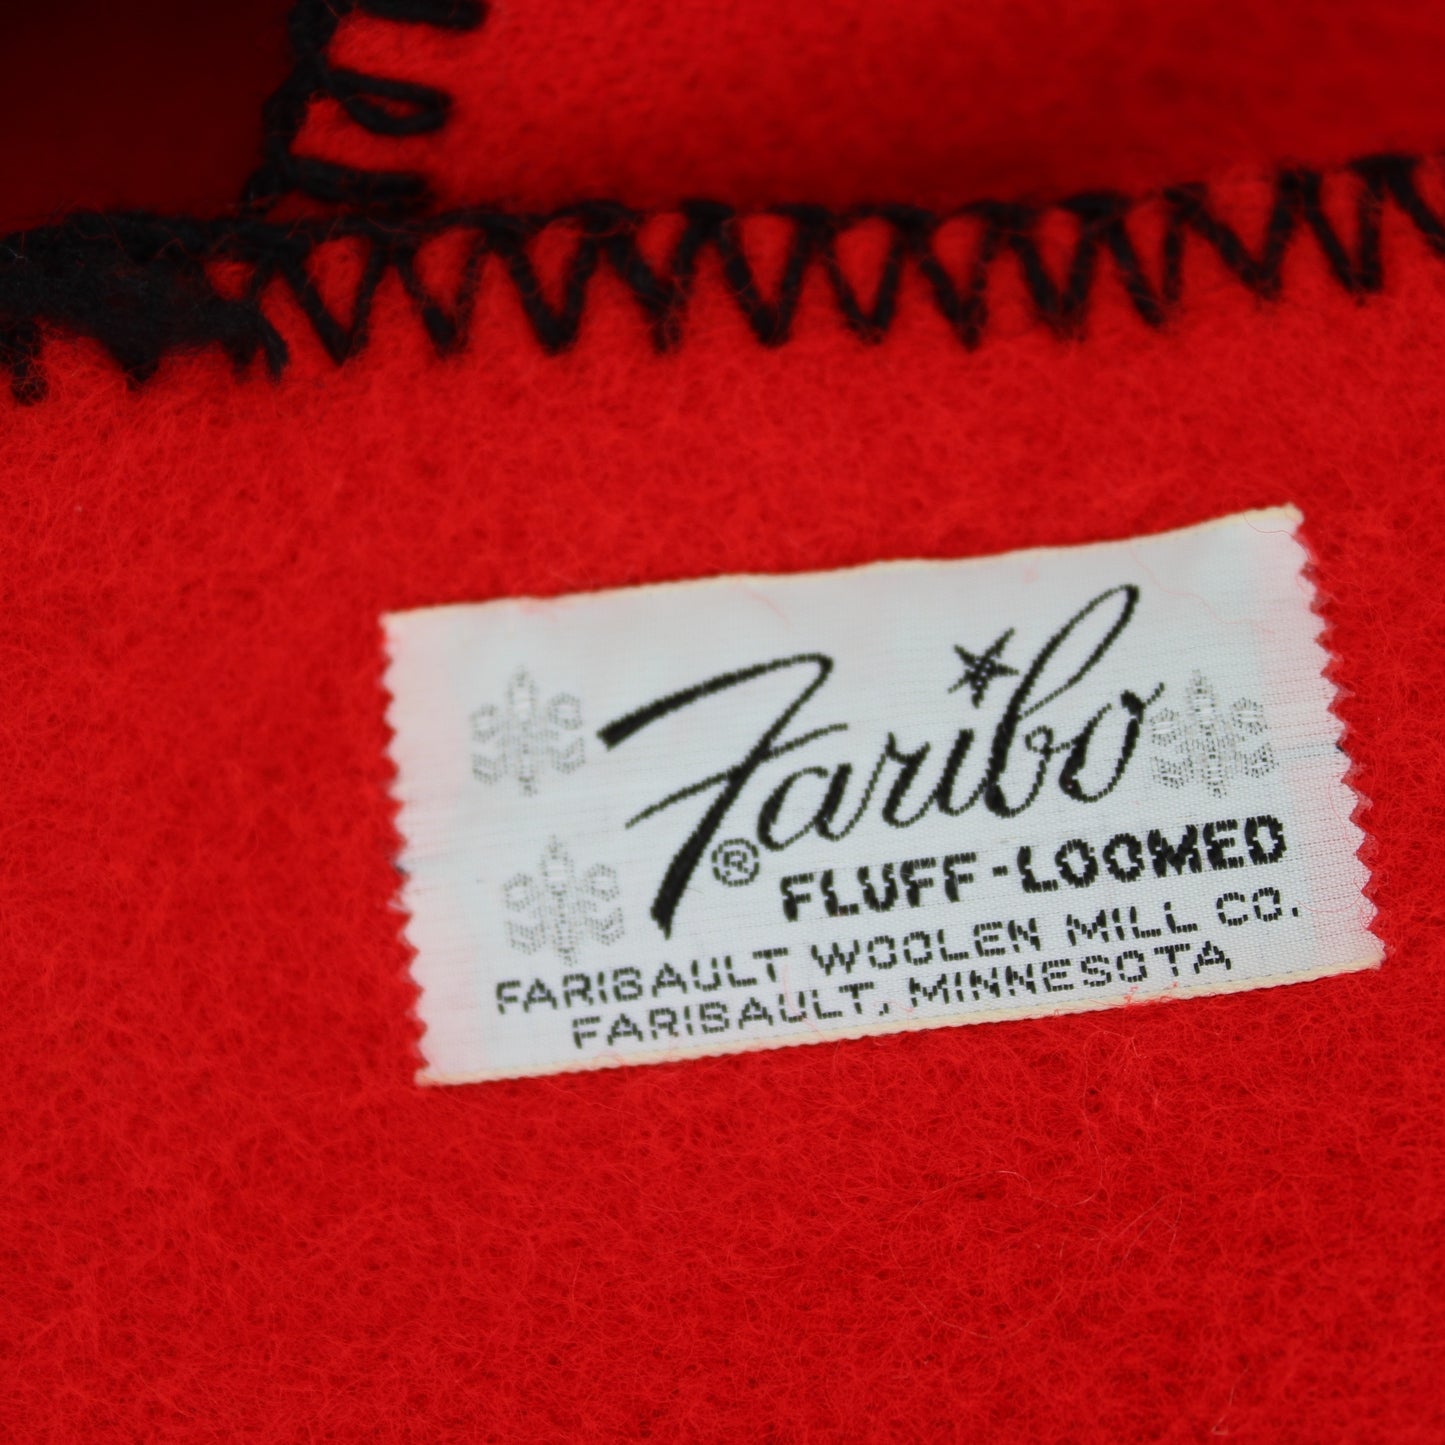 Faribo Fluff Loomed Throw Red With Black Blanket Stitch 45" X 58" USA Faribault MN original maker tag faribo